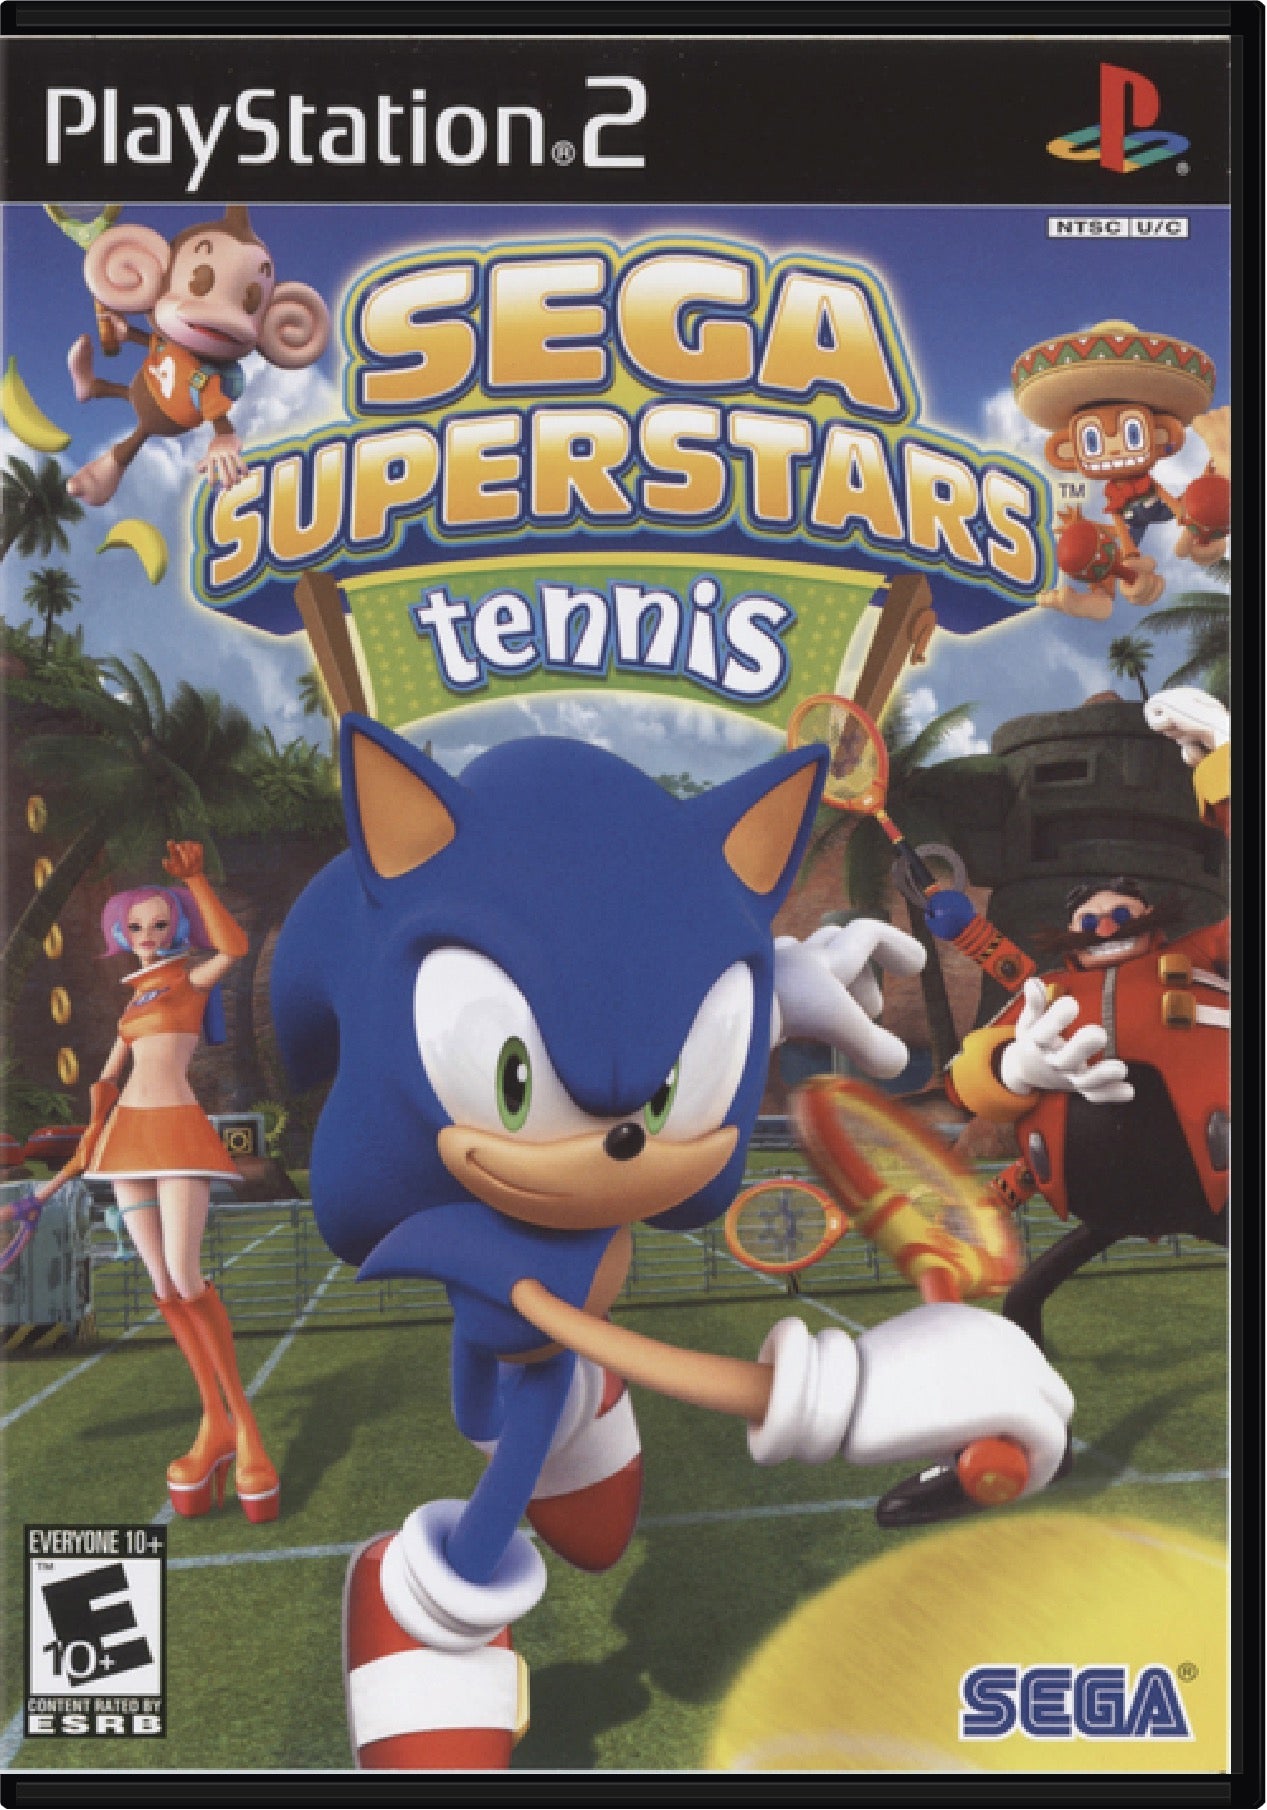 Sega Superstars Tennis Cover Art and Product Photo